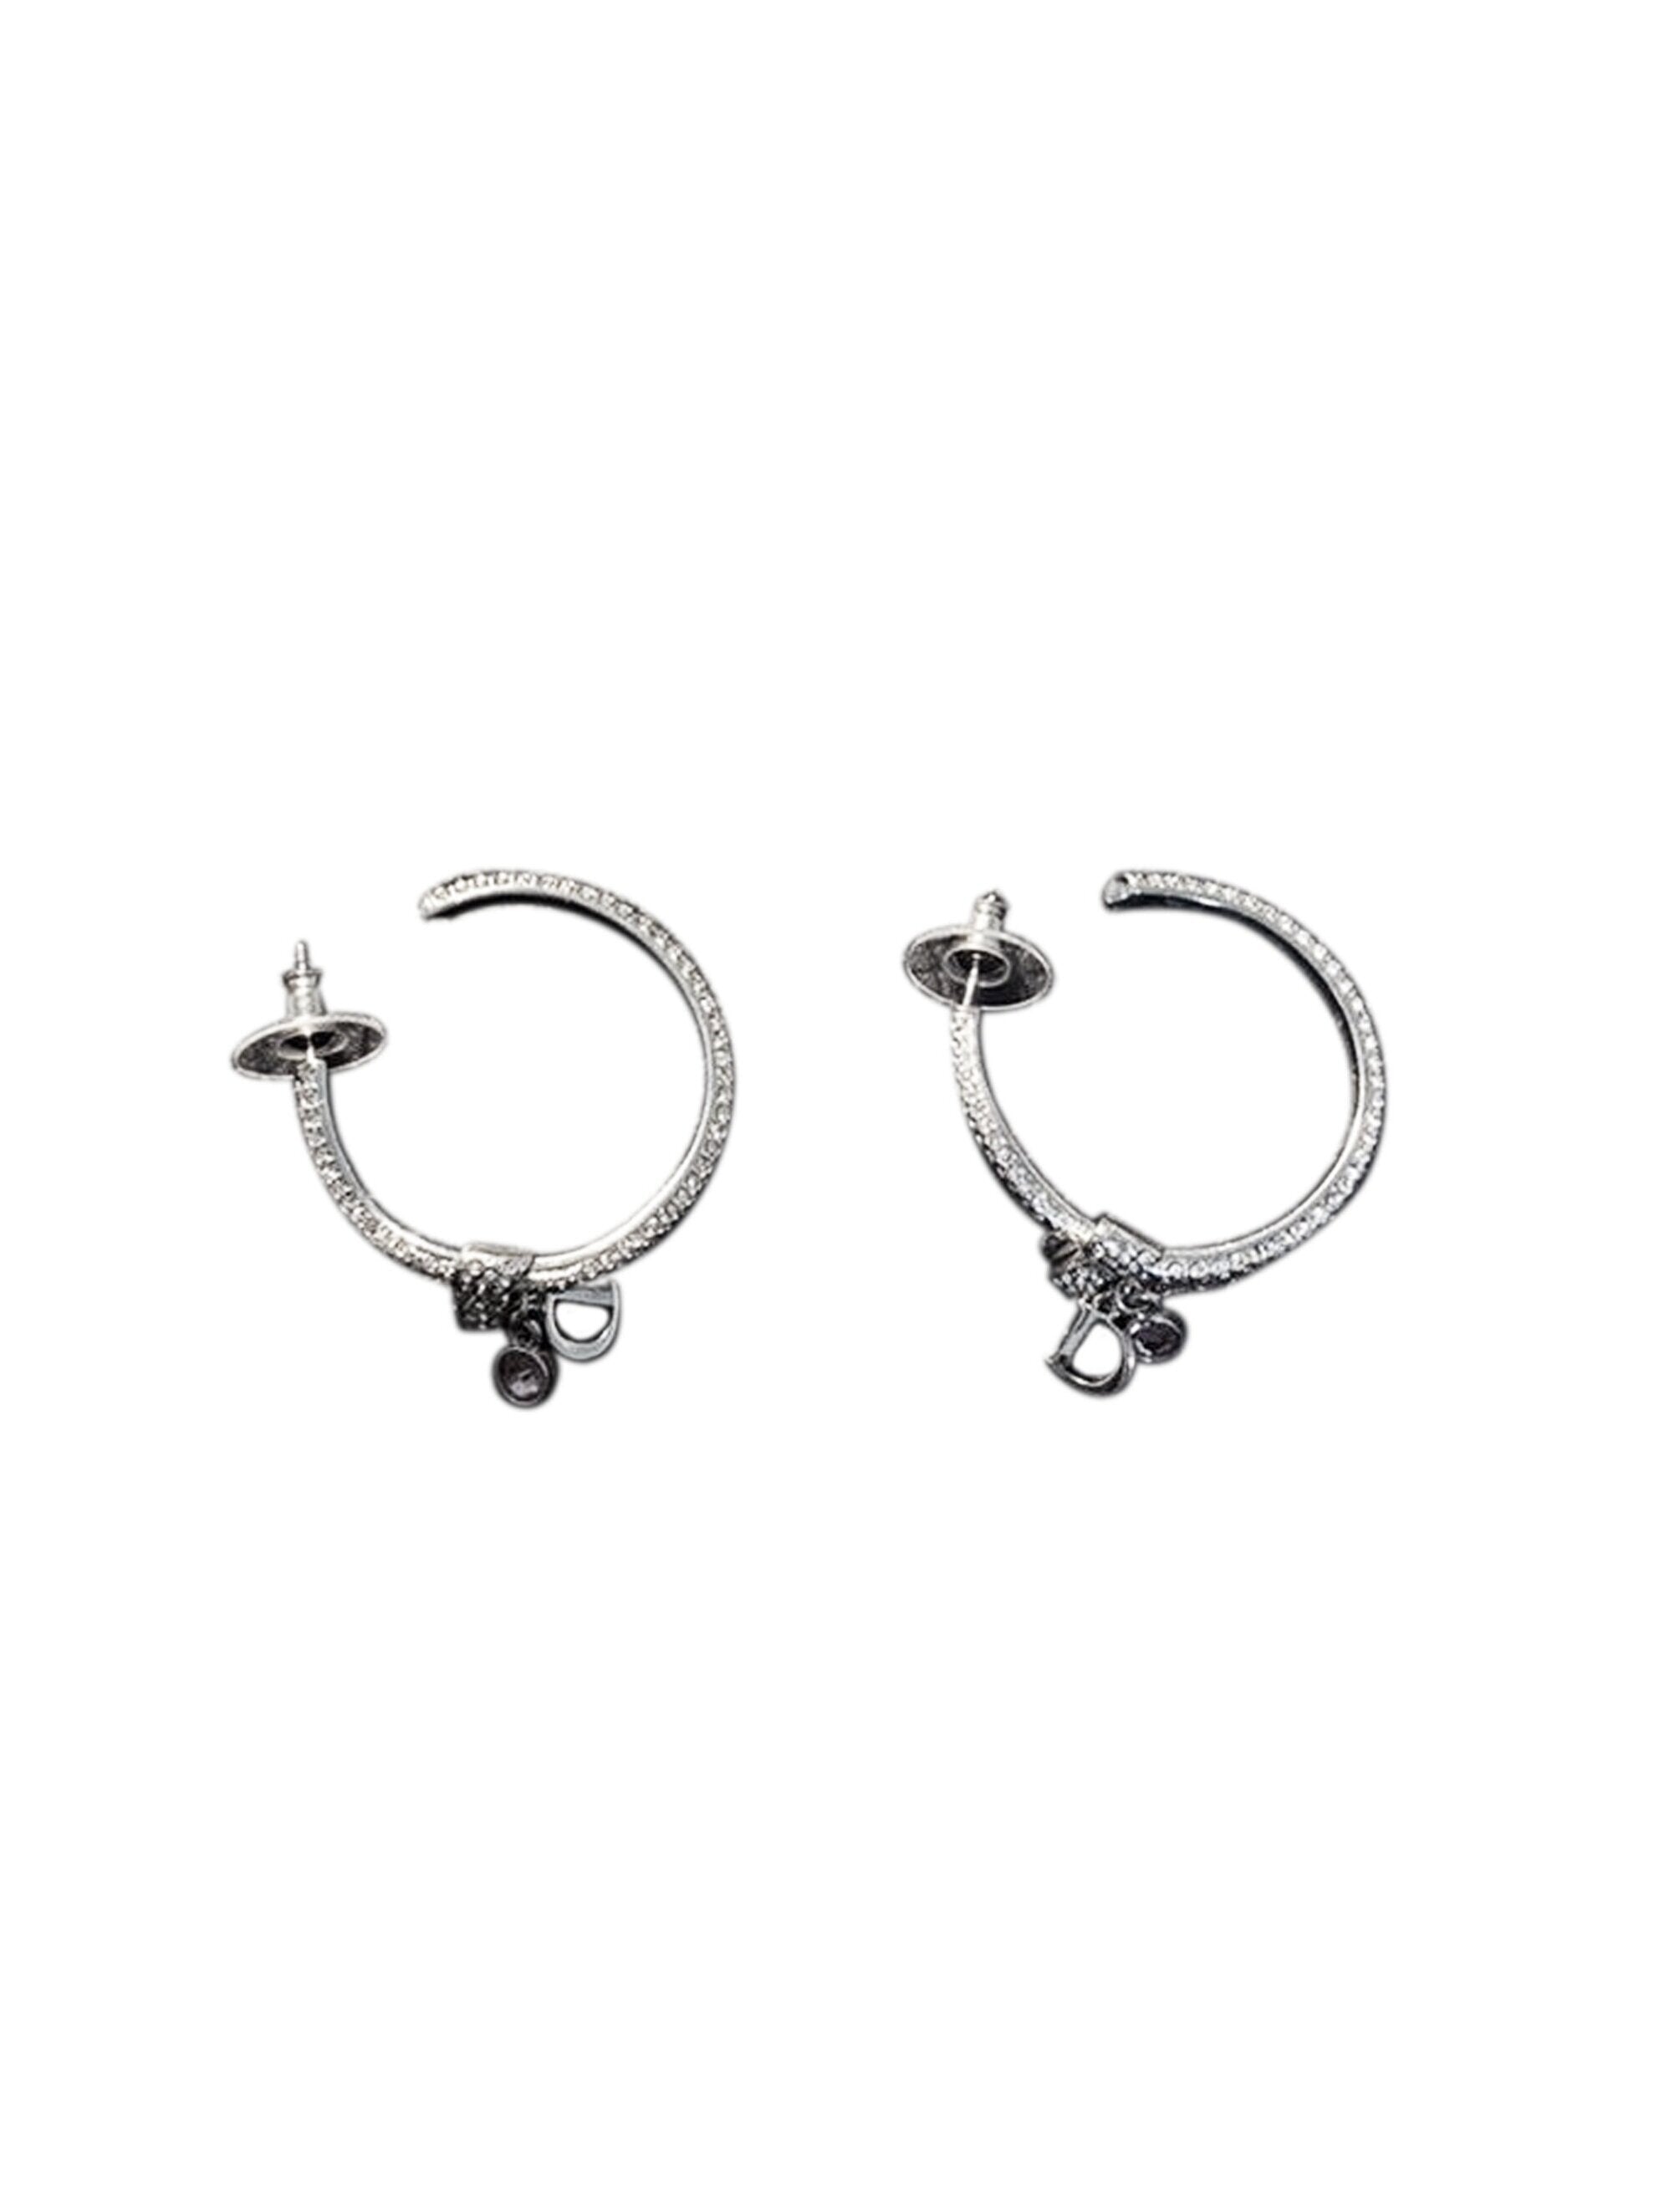 Christian Dior 2000s Silver Bow Hoop Earrings